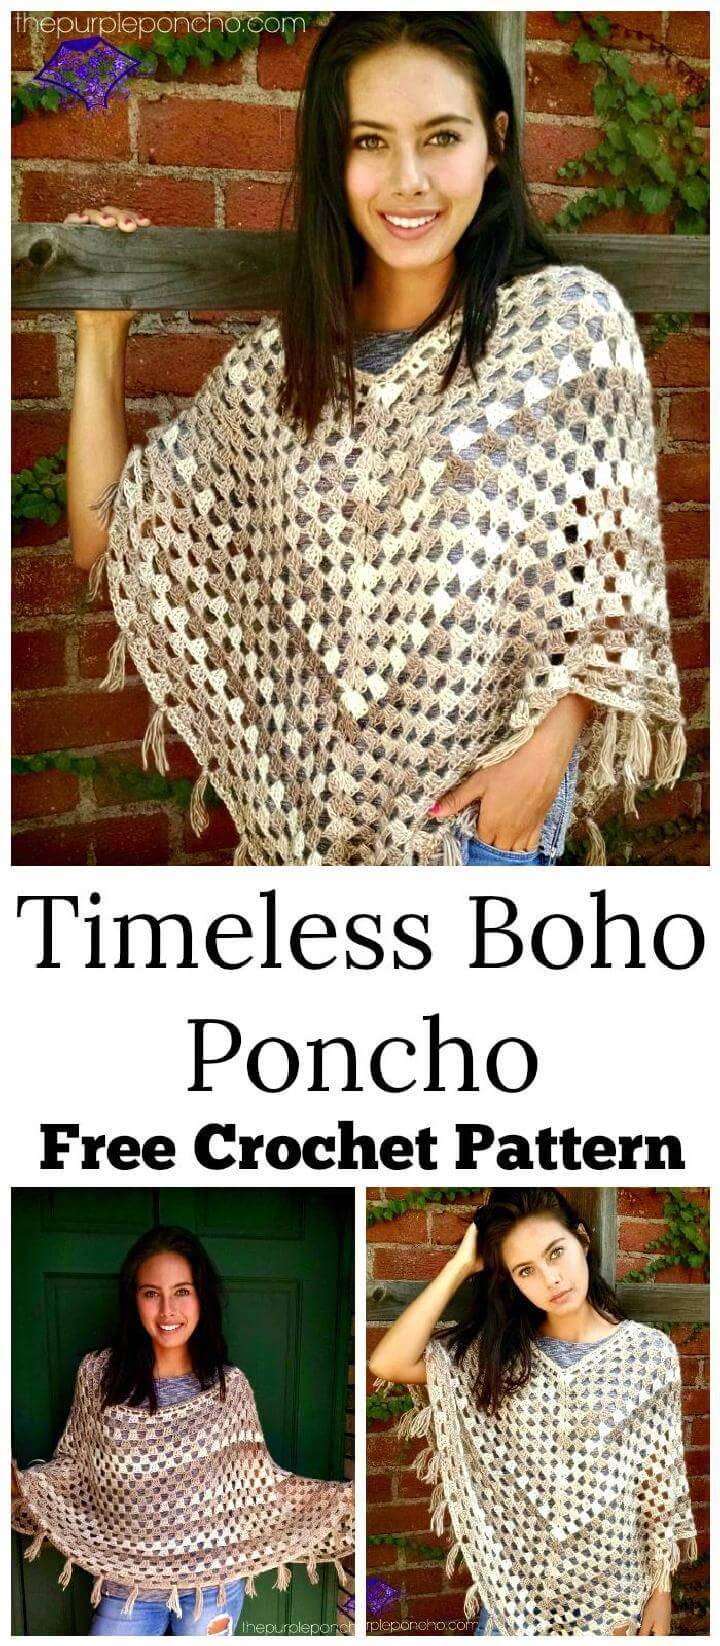 Timeless Boho Poncho – Free Crochet Pattern